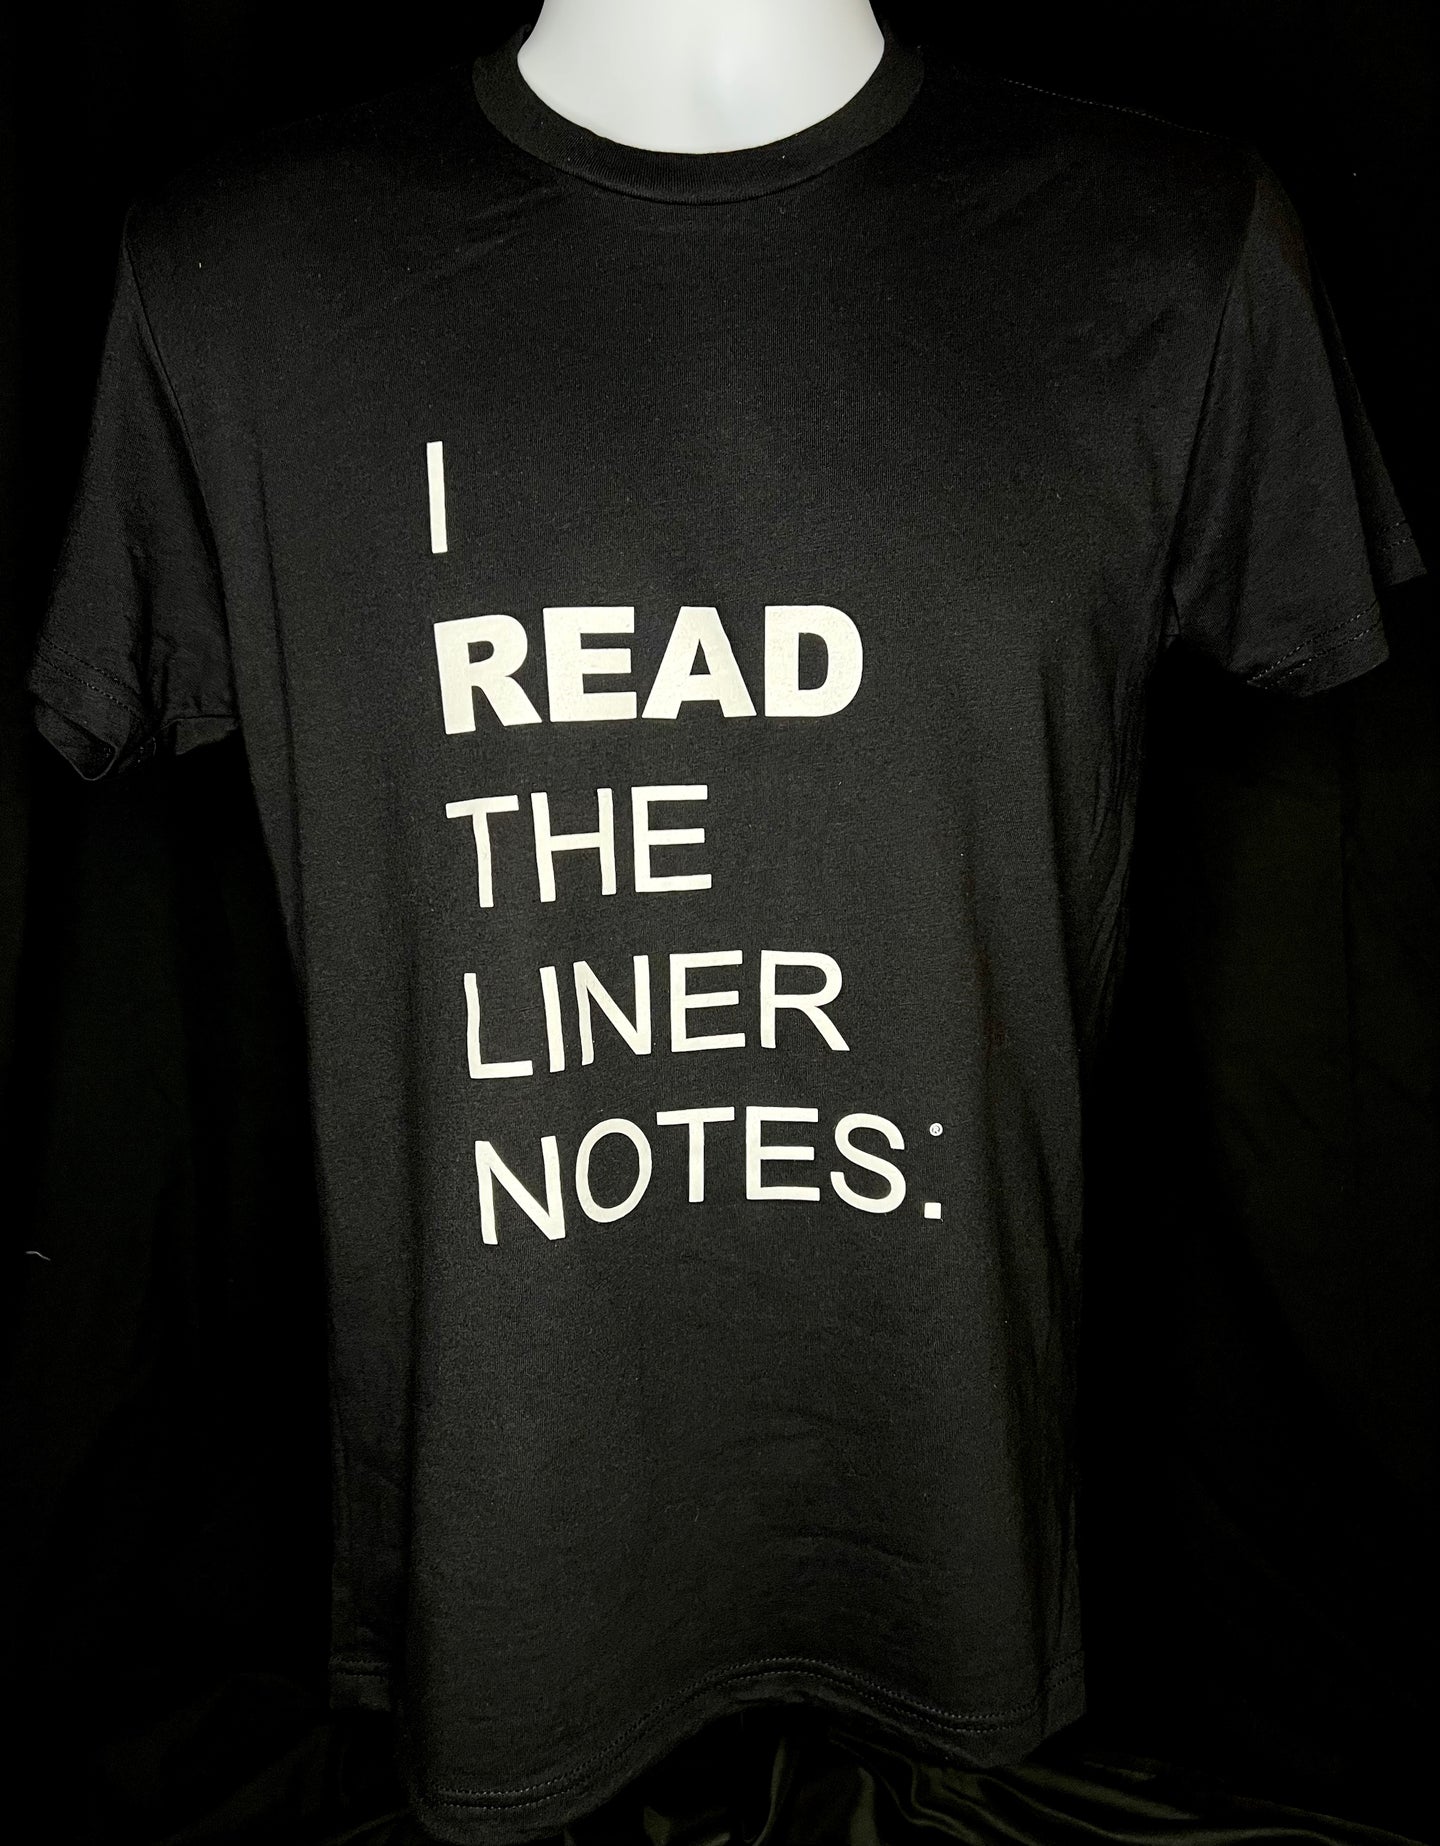 I Read The Liner Notes.® - Black T-Shirt (Unisex)